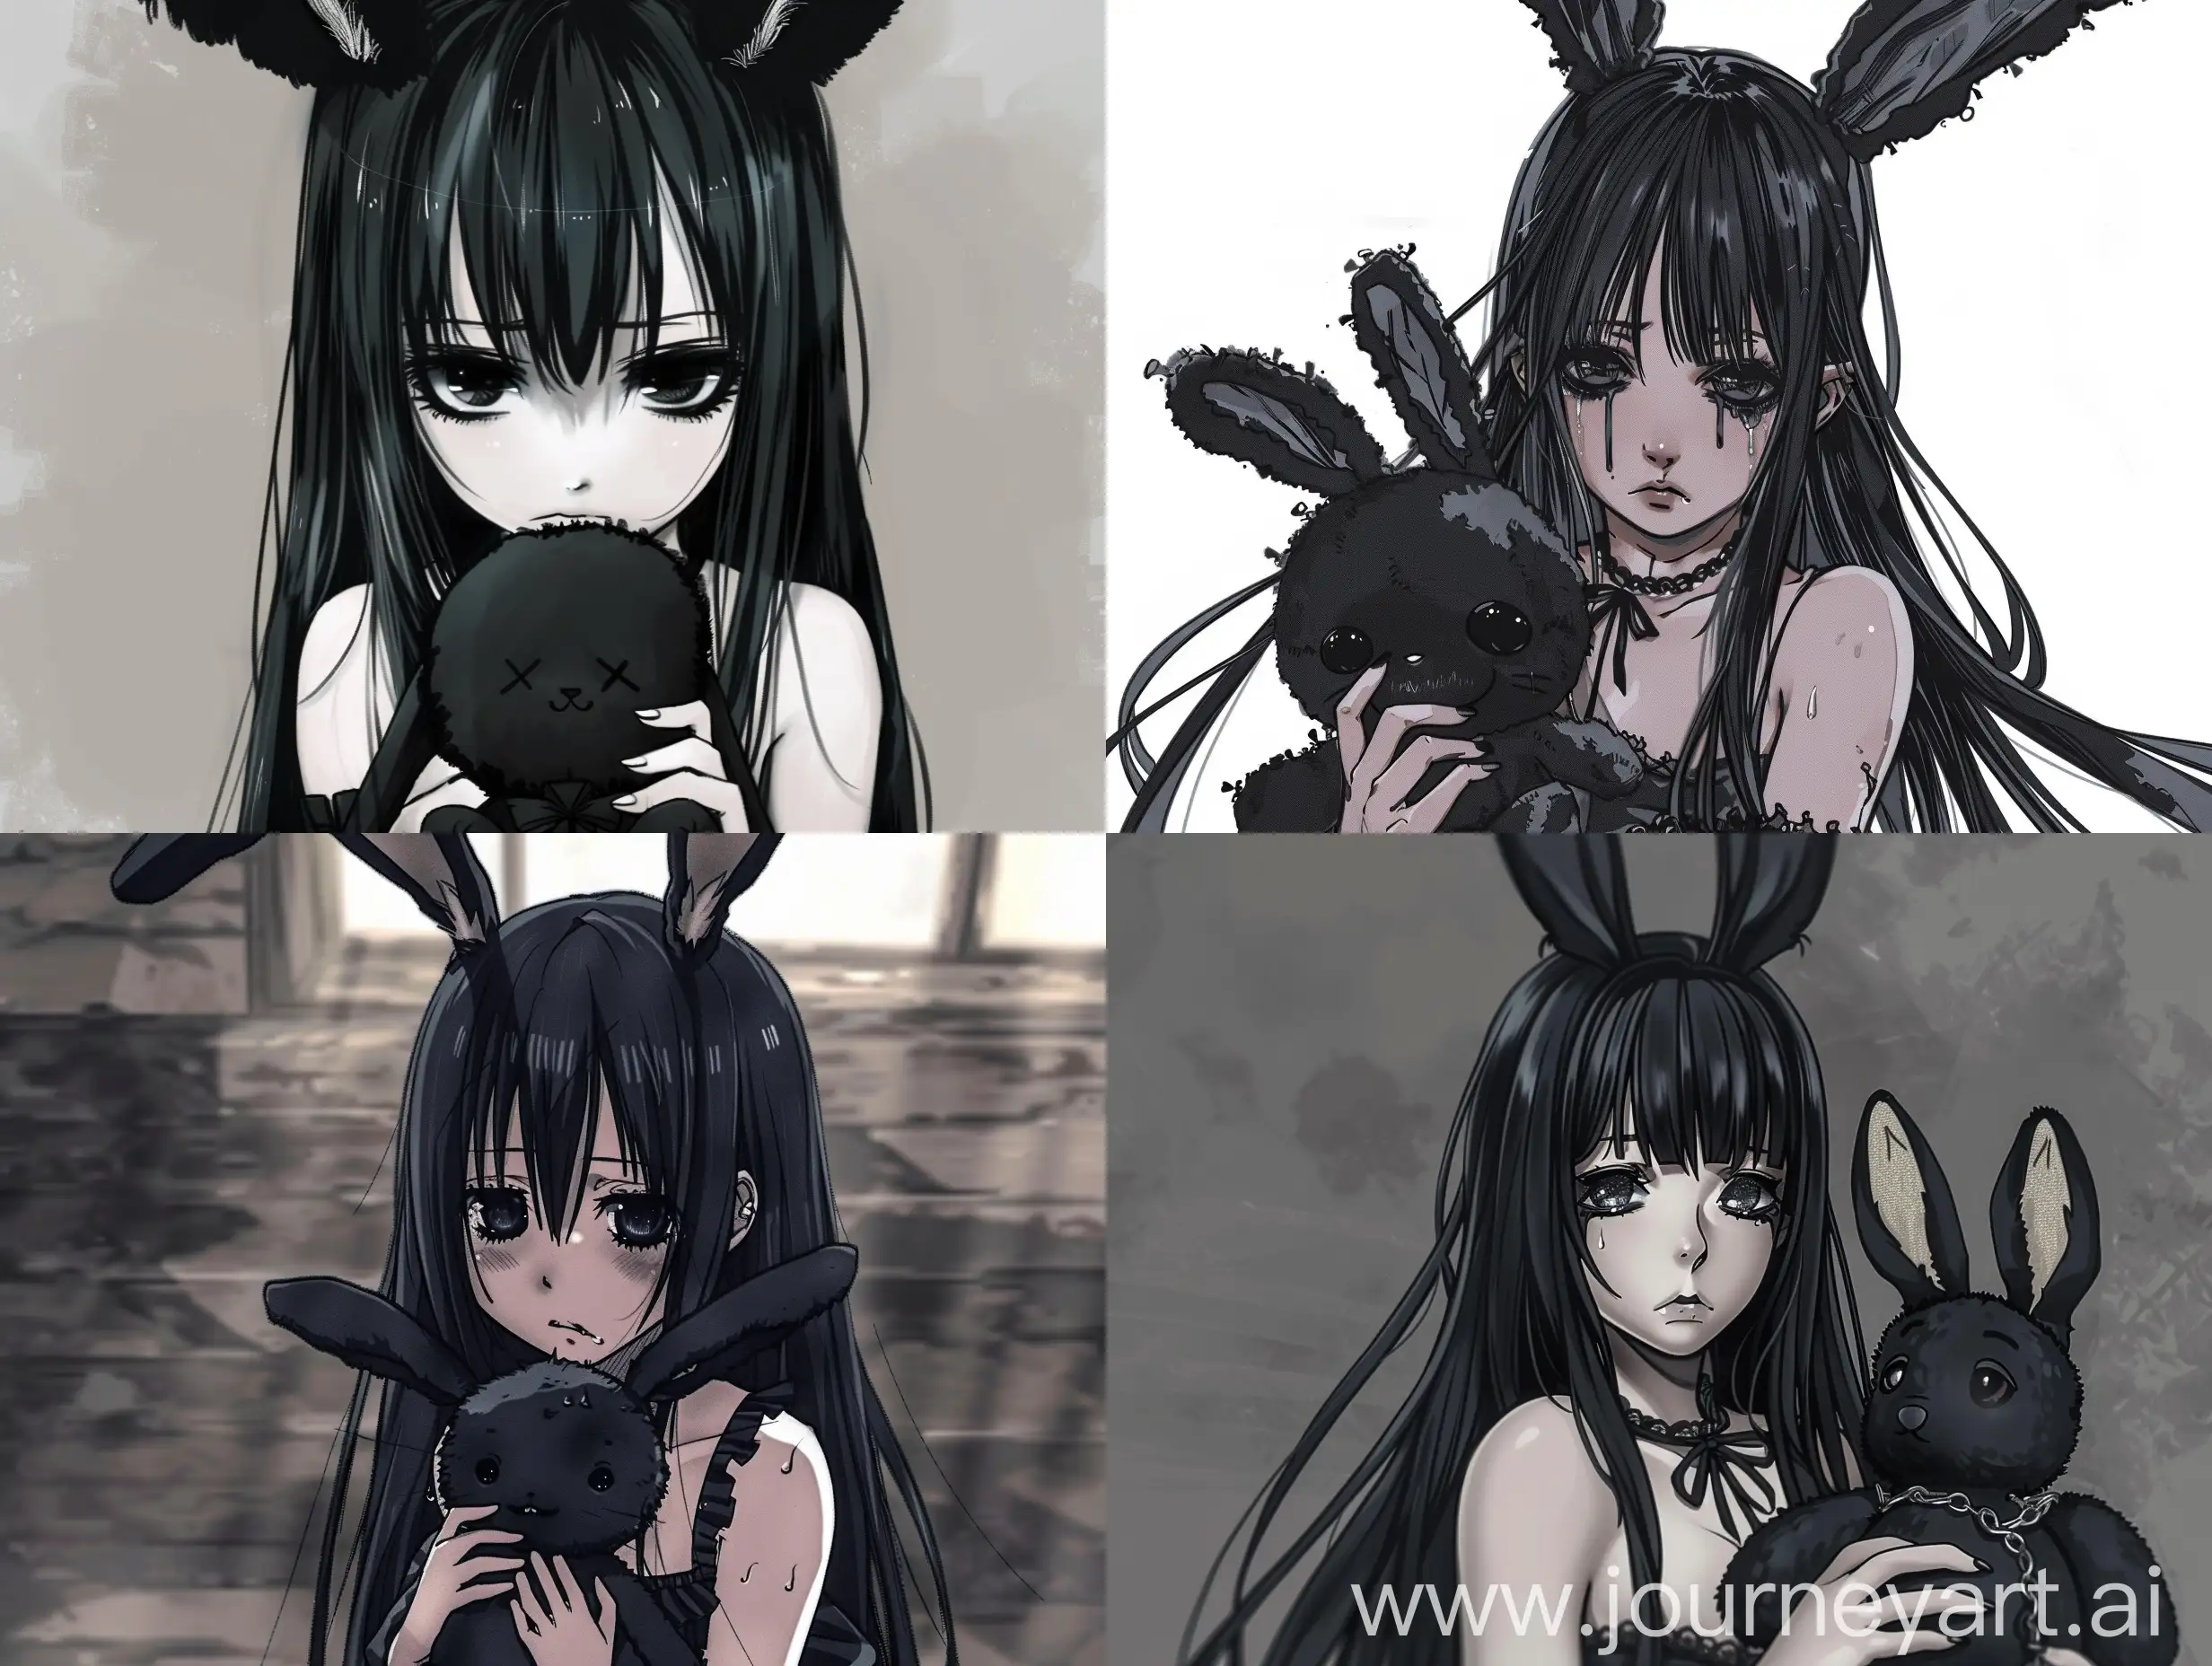 Melancholic-Gothic-Girl-with-Bunny-Ears-Holding-Plush-Black-Bunny-Toy